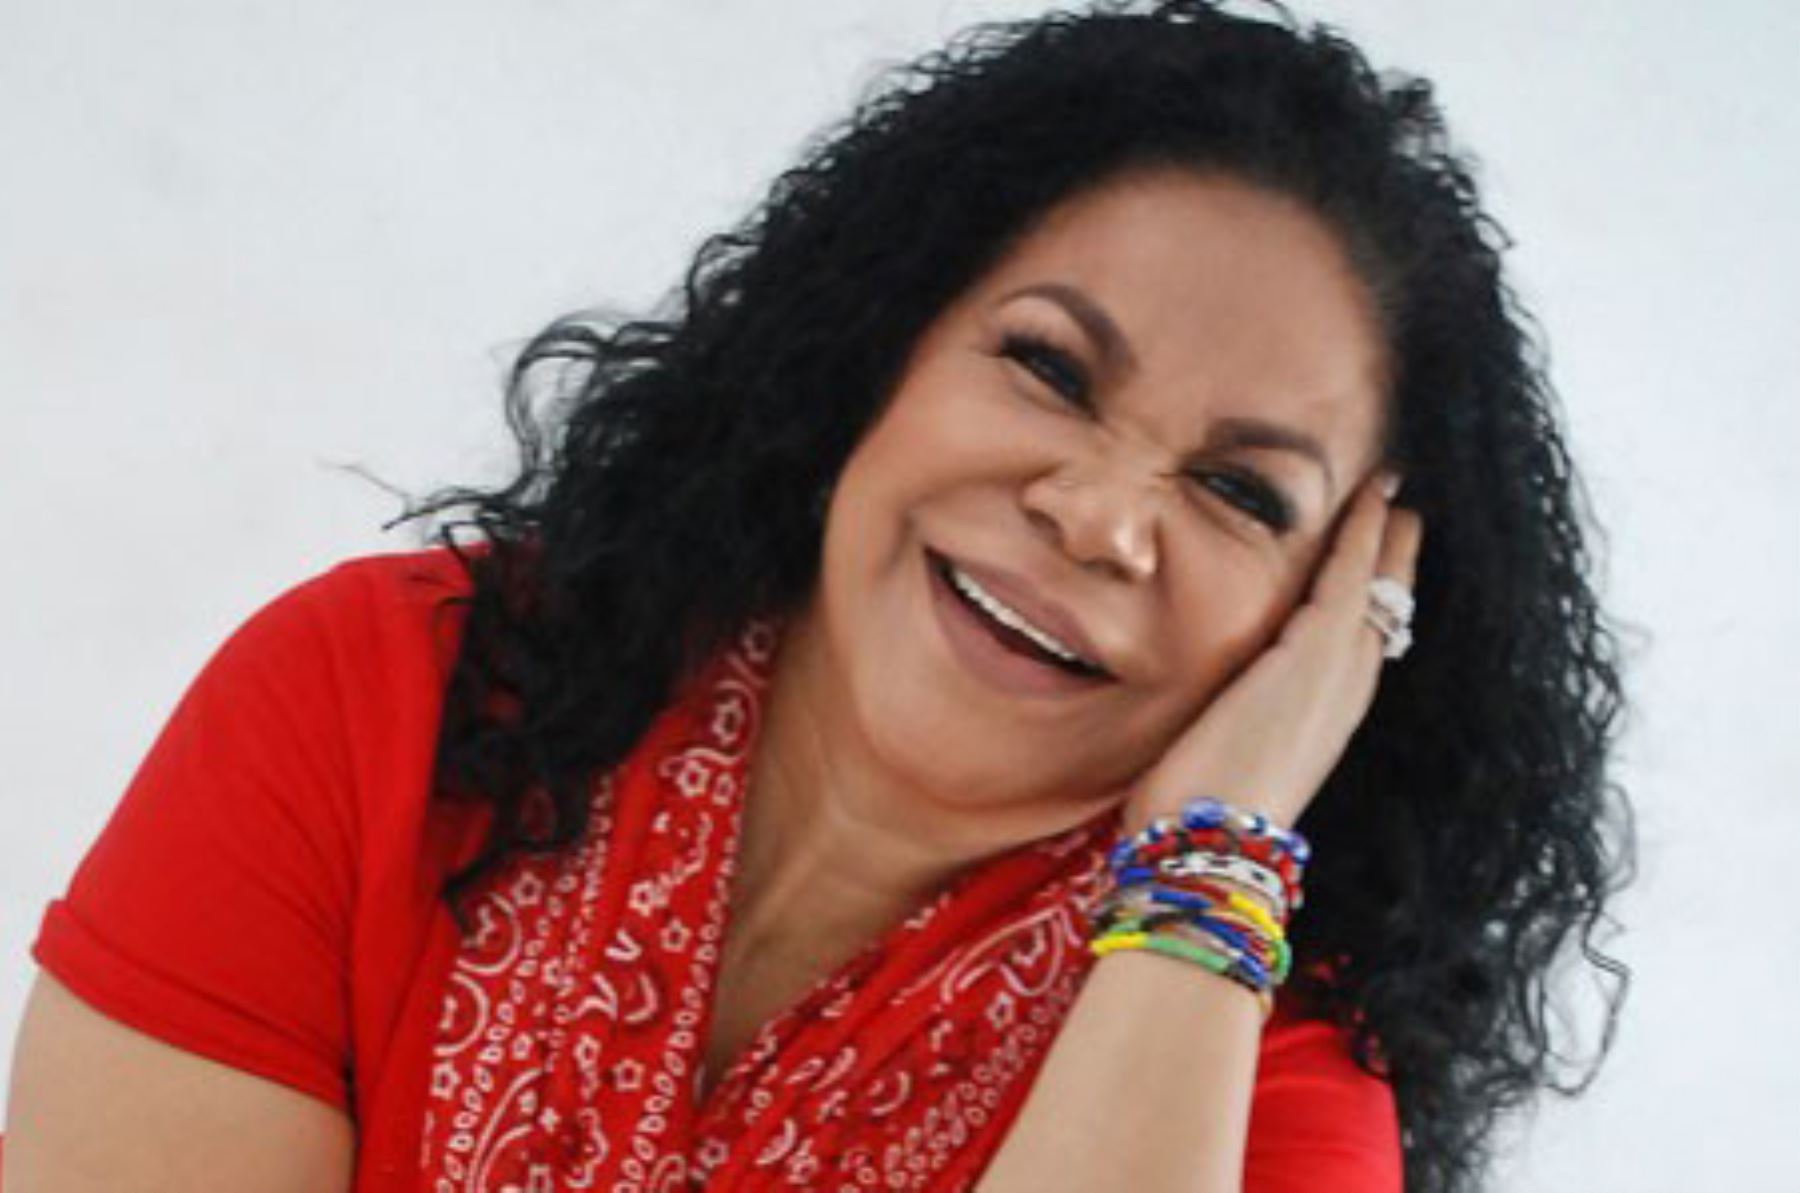 Aniversario de Lima Eva Ayllón estrena disco digital de música criolla